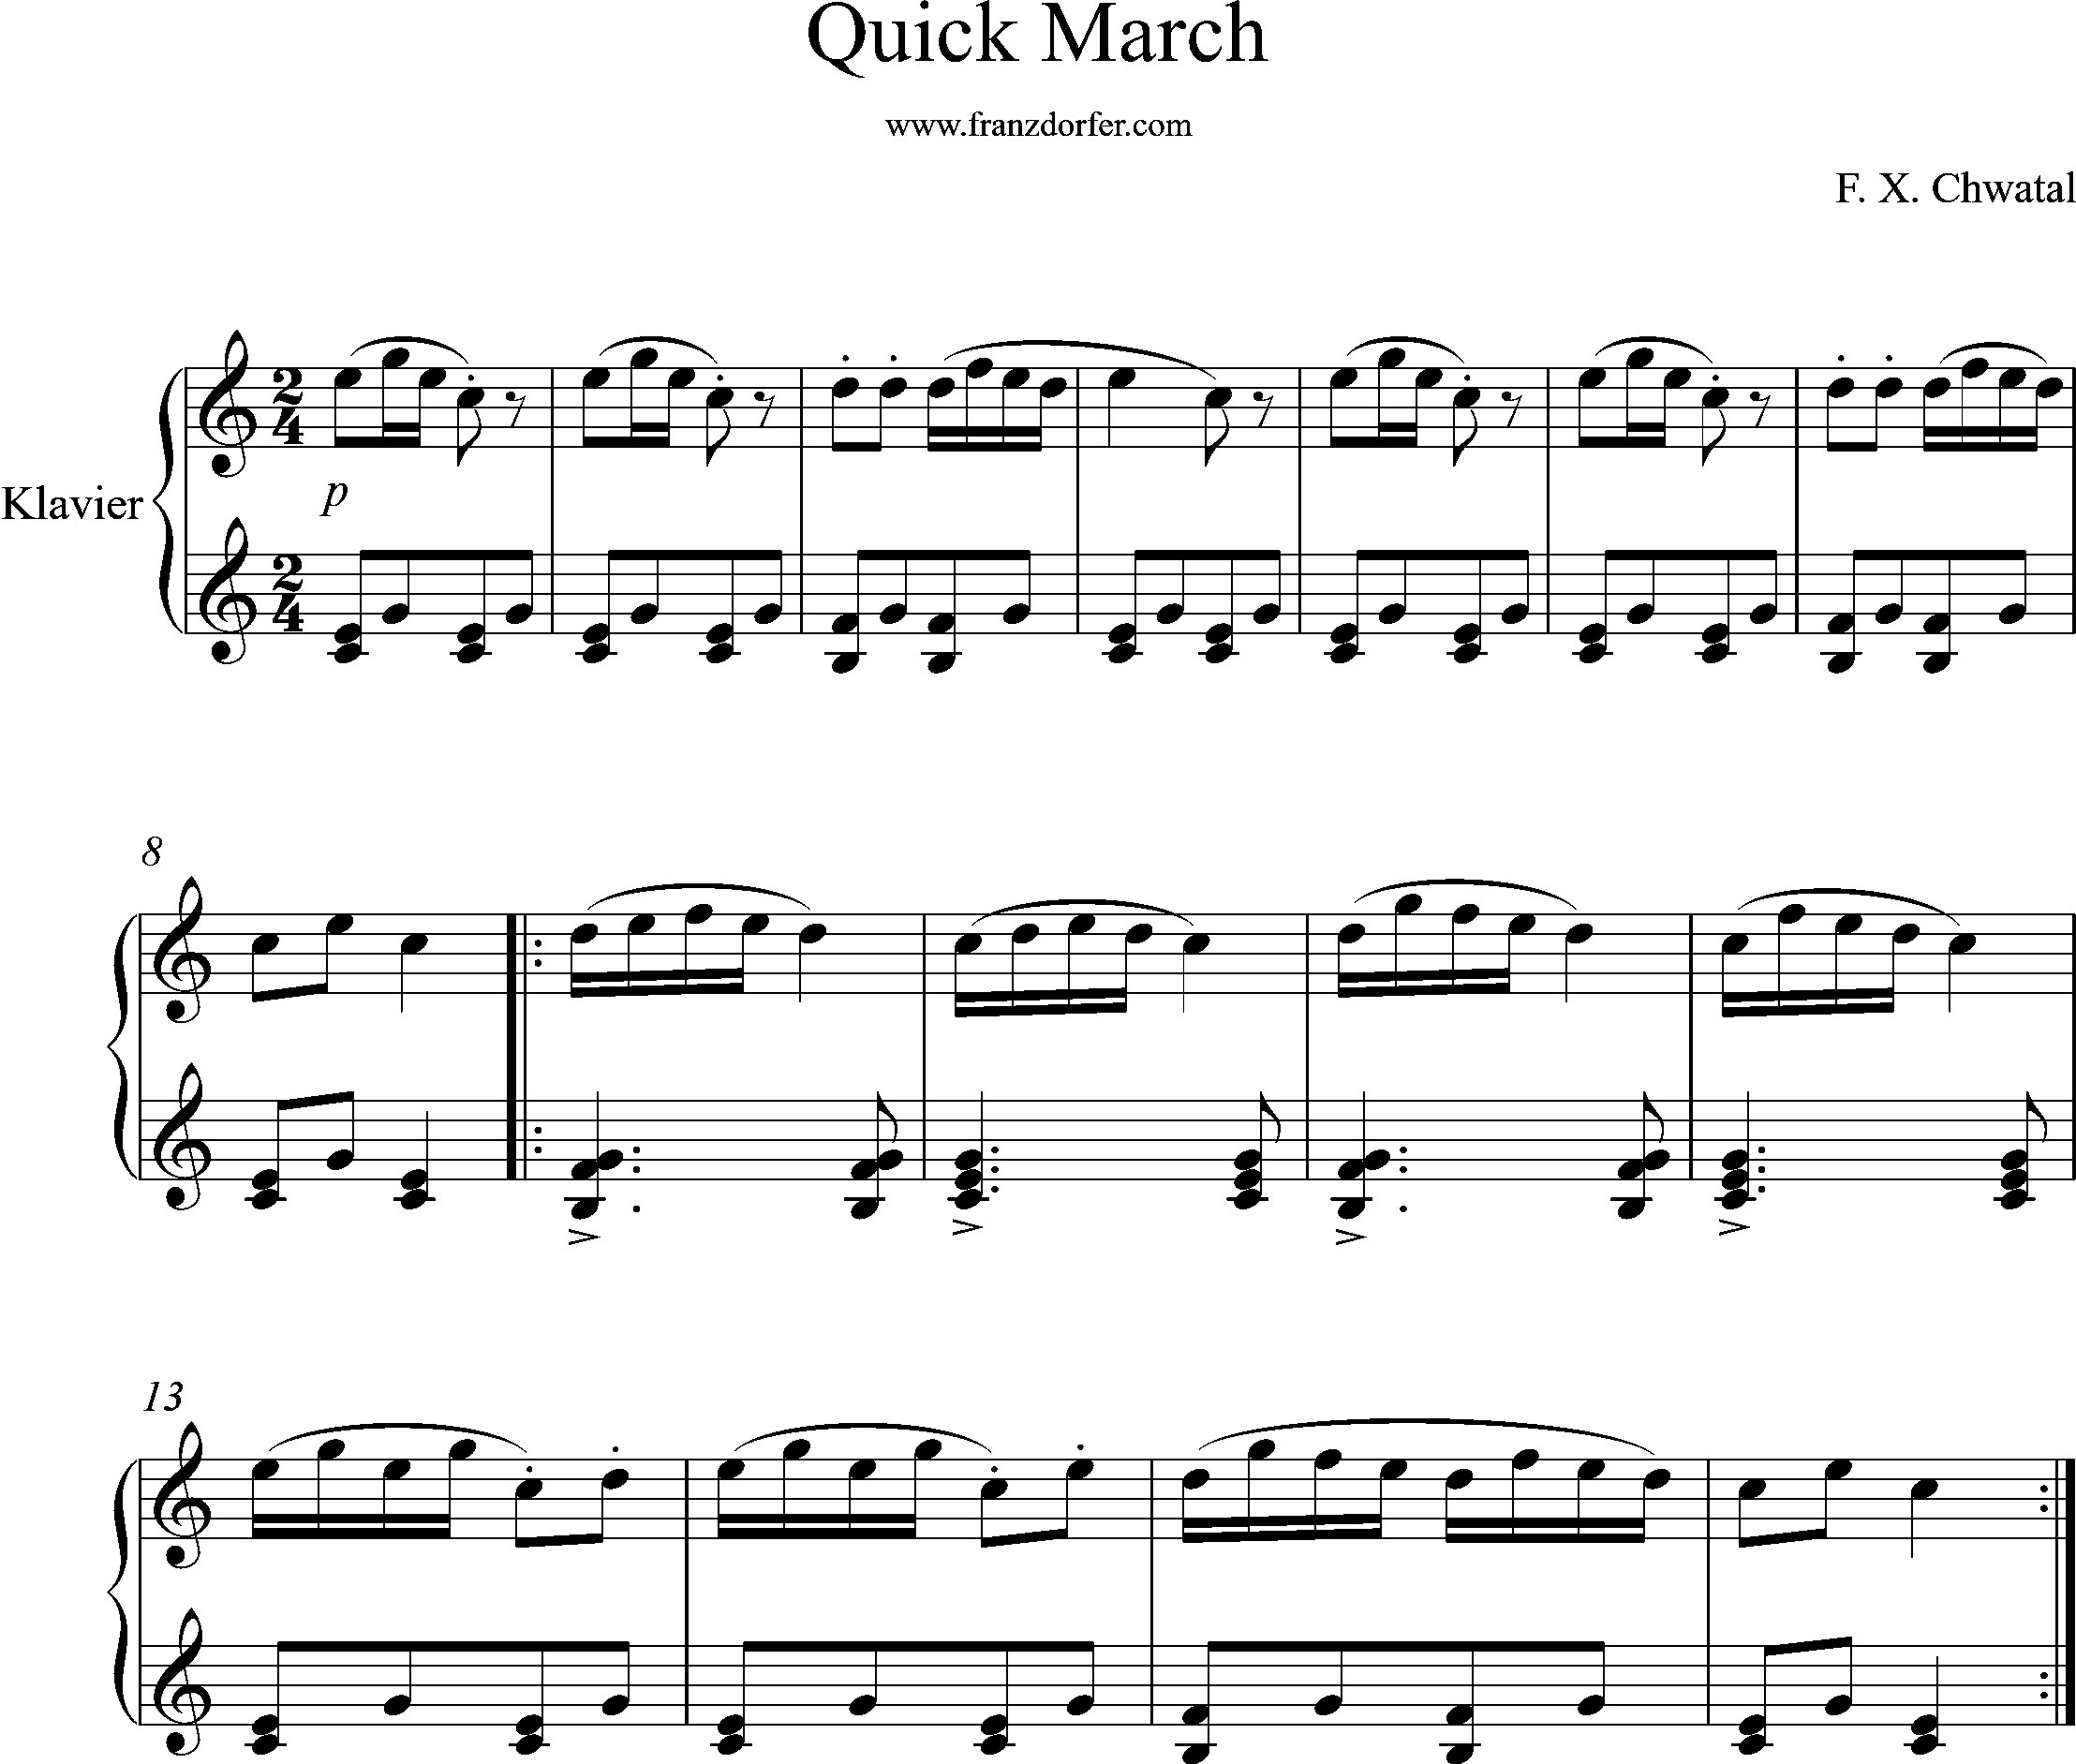 Piano sheetmusic, Quick March, Chwatal